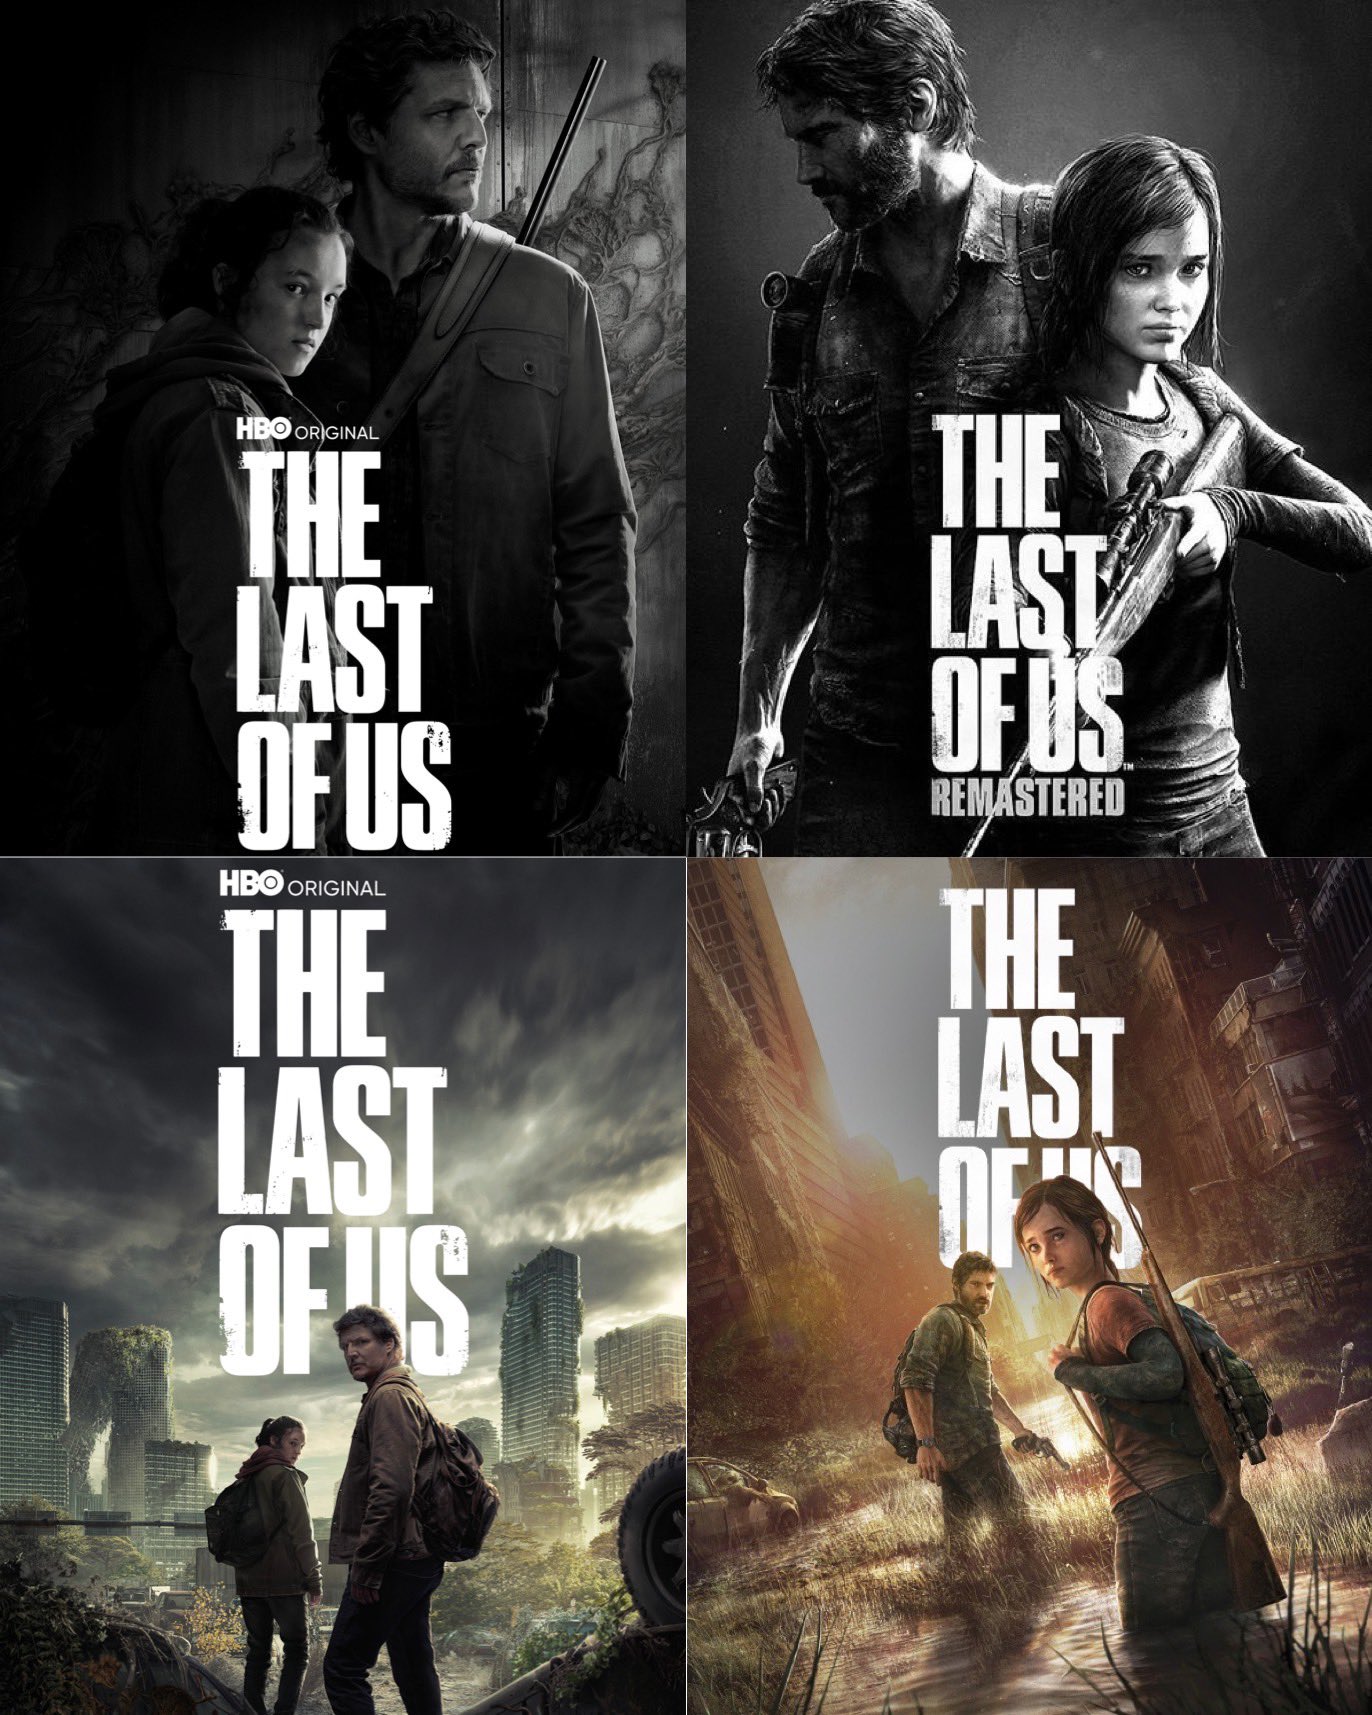 The Last of Us HBO Original Series Poster 4K Ultra HD Mobile Wallpaper